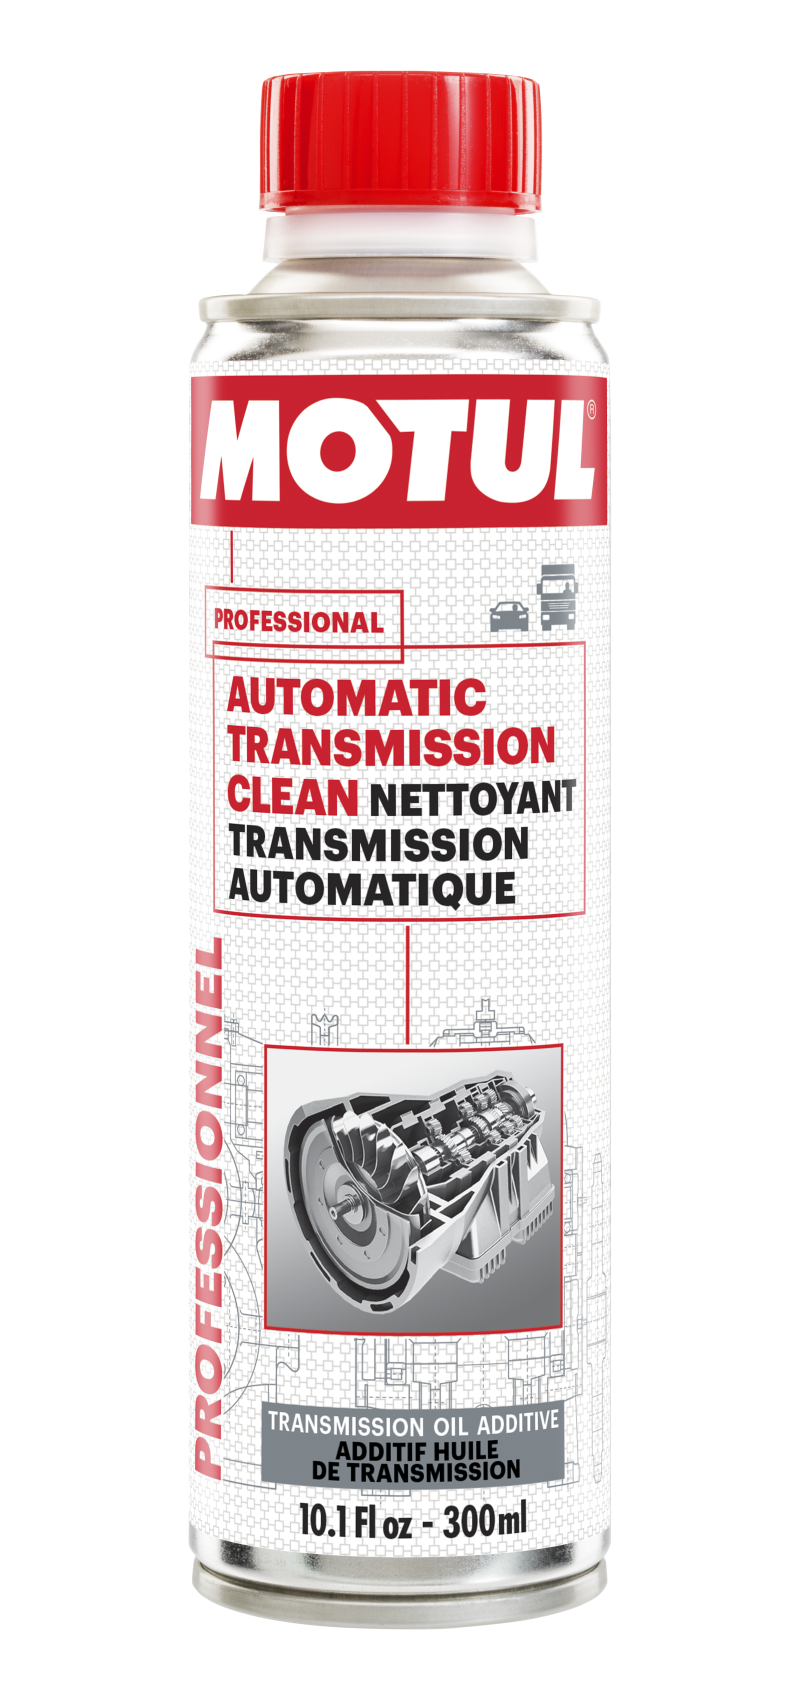 Motul MOT Engine Clean Oils & Oil Filters Additives main image